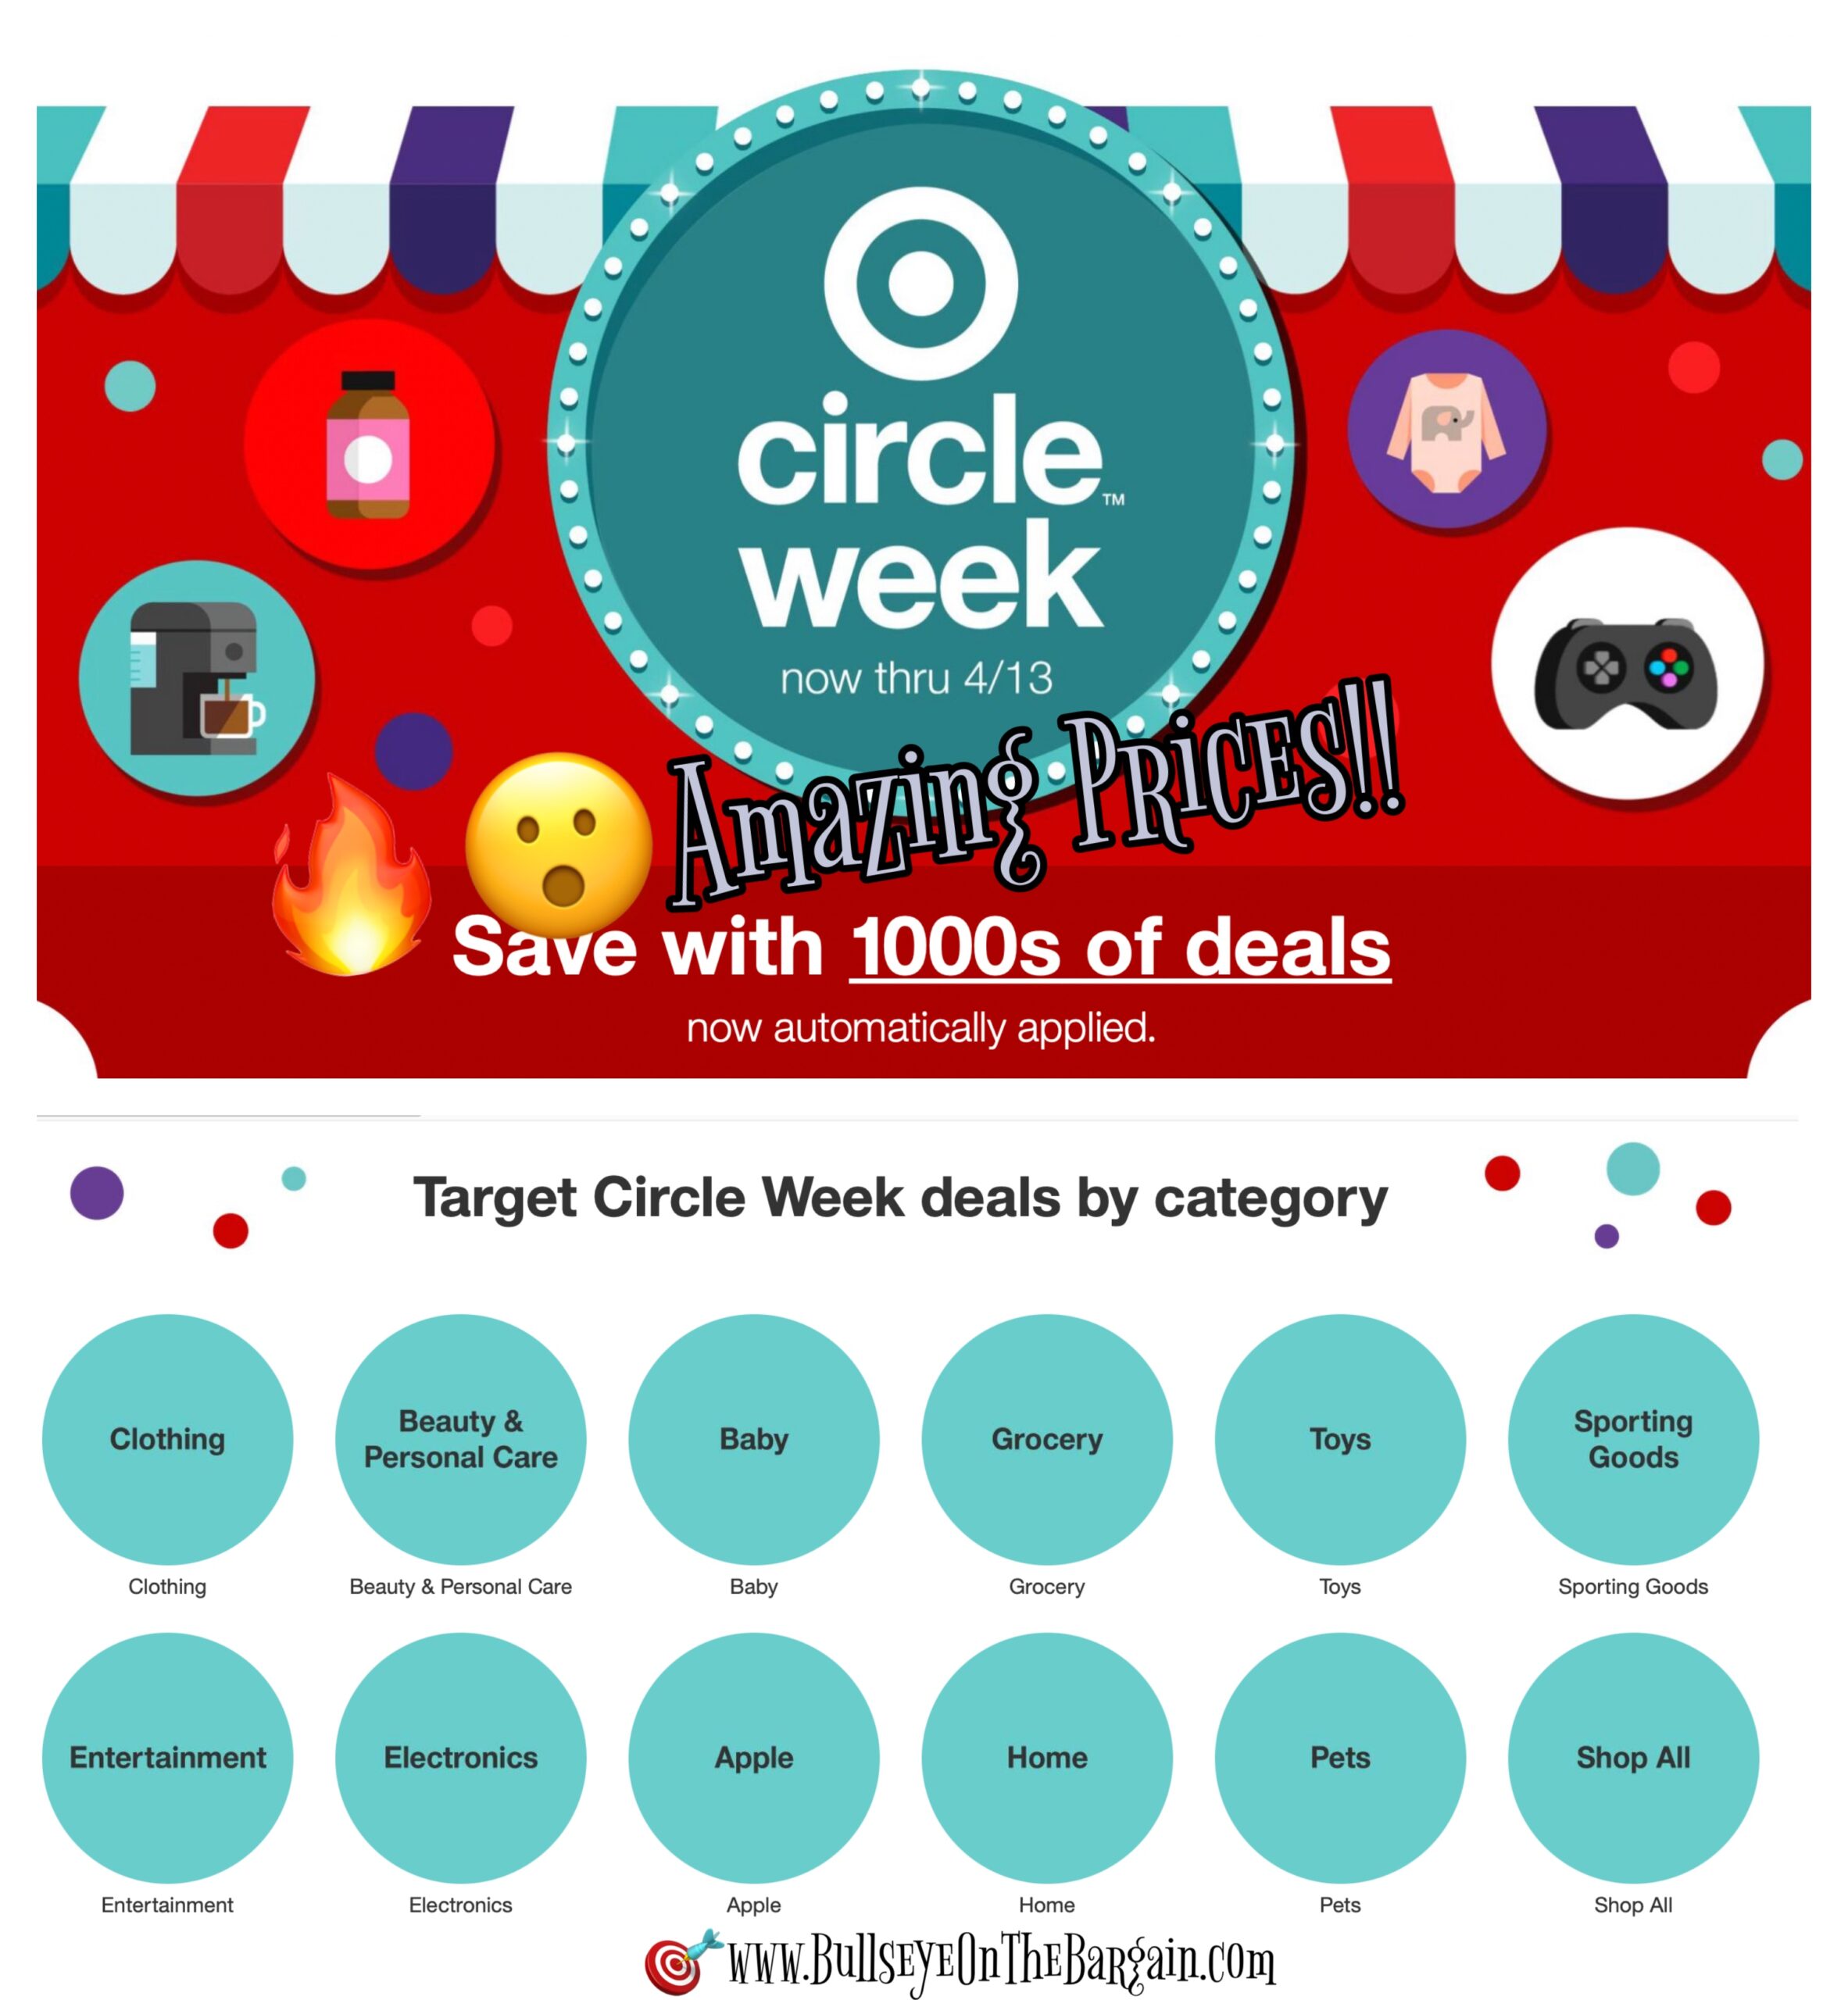 Target Circle Week ENDS TOMORROW!